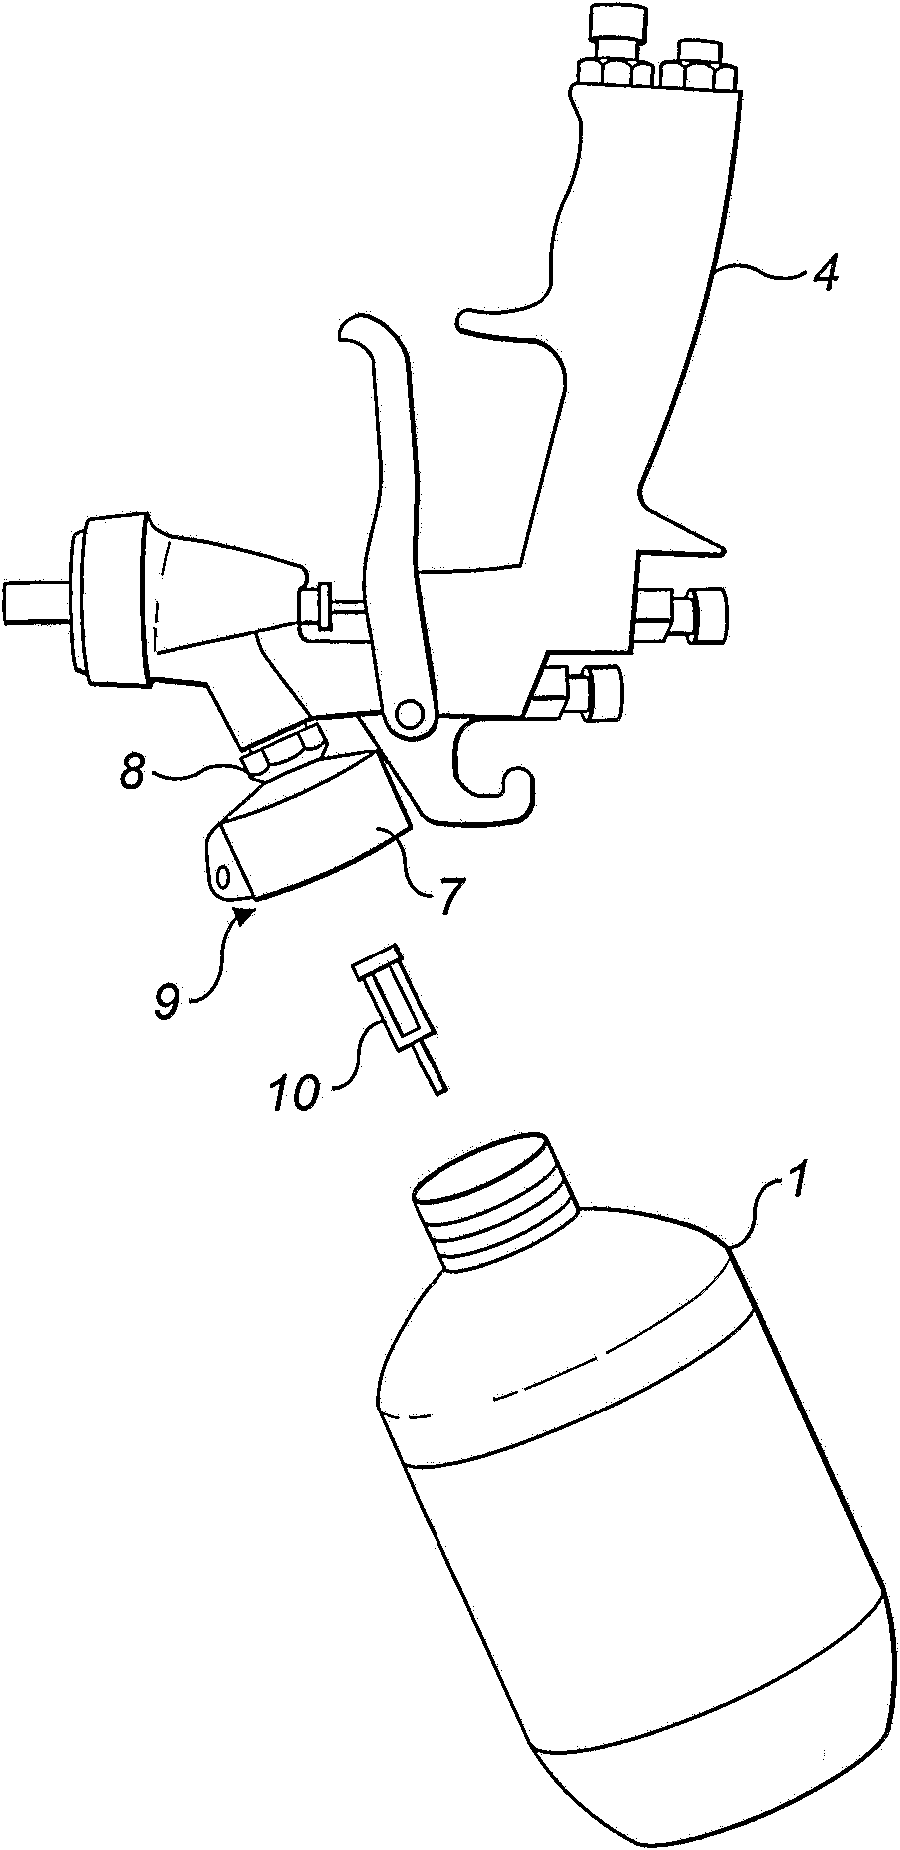 A connector for a gravity feed spray gun, a gravity feed spray gun and a method of preparing a spray paint